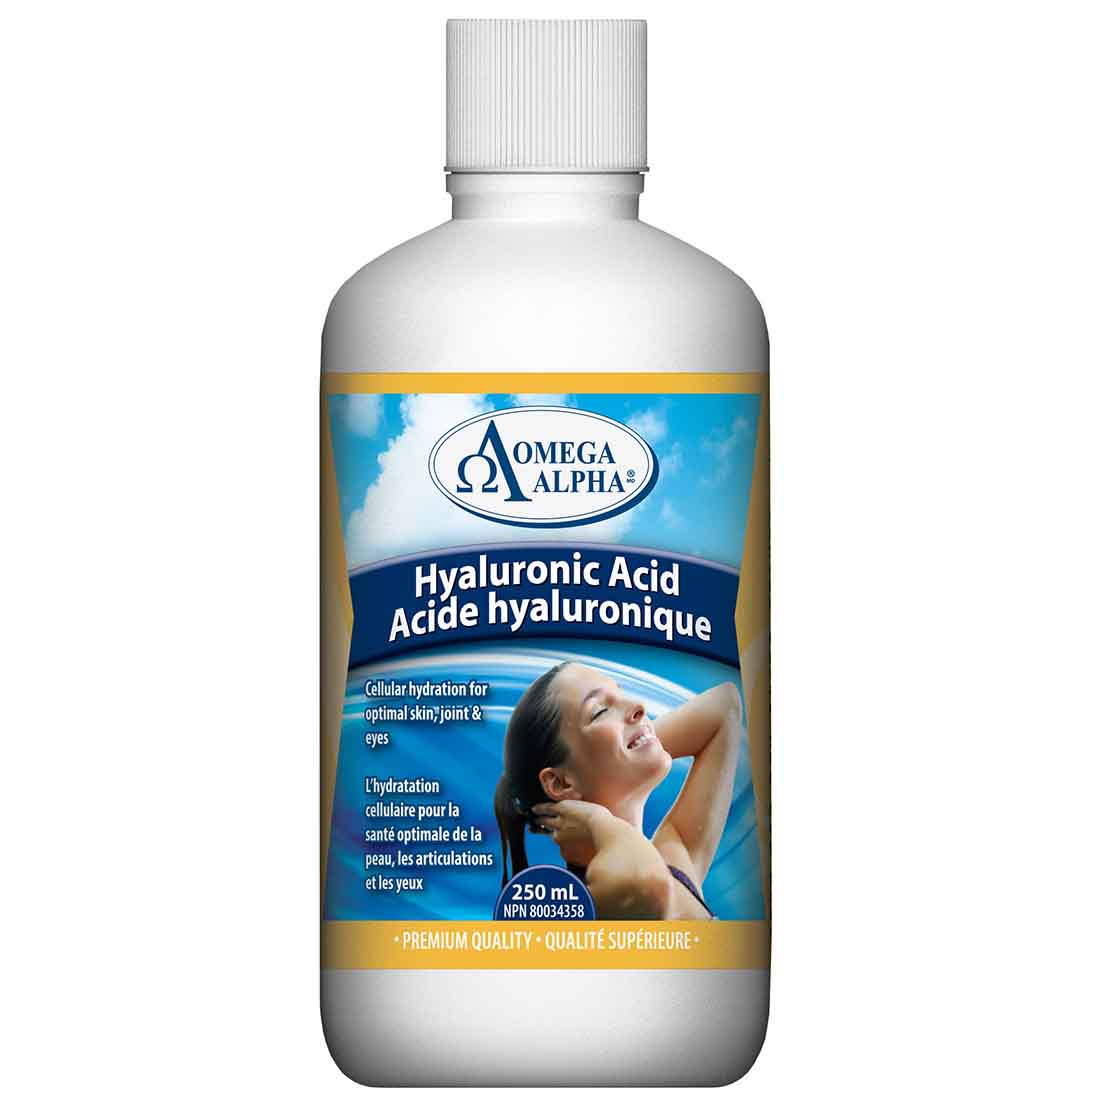 Omega Alpha Hyaluronic Acid Liquid (with Vitamin C), 250ml